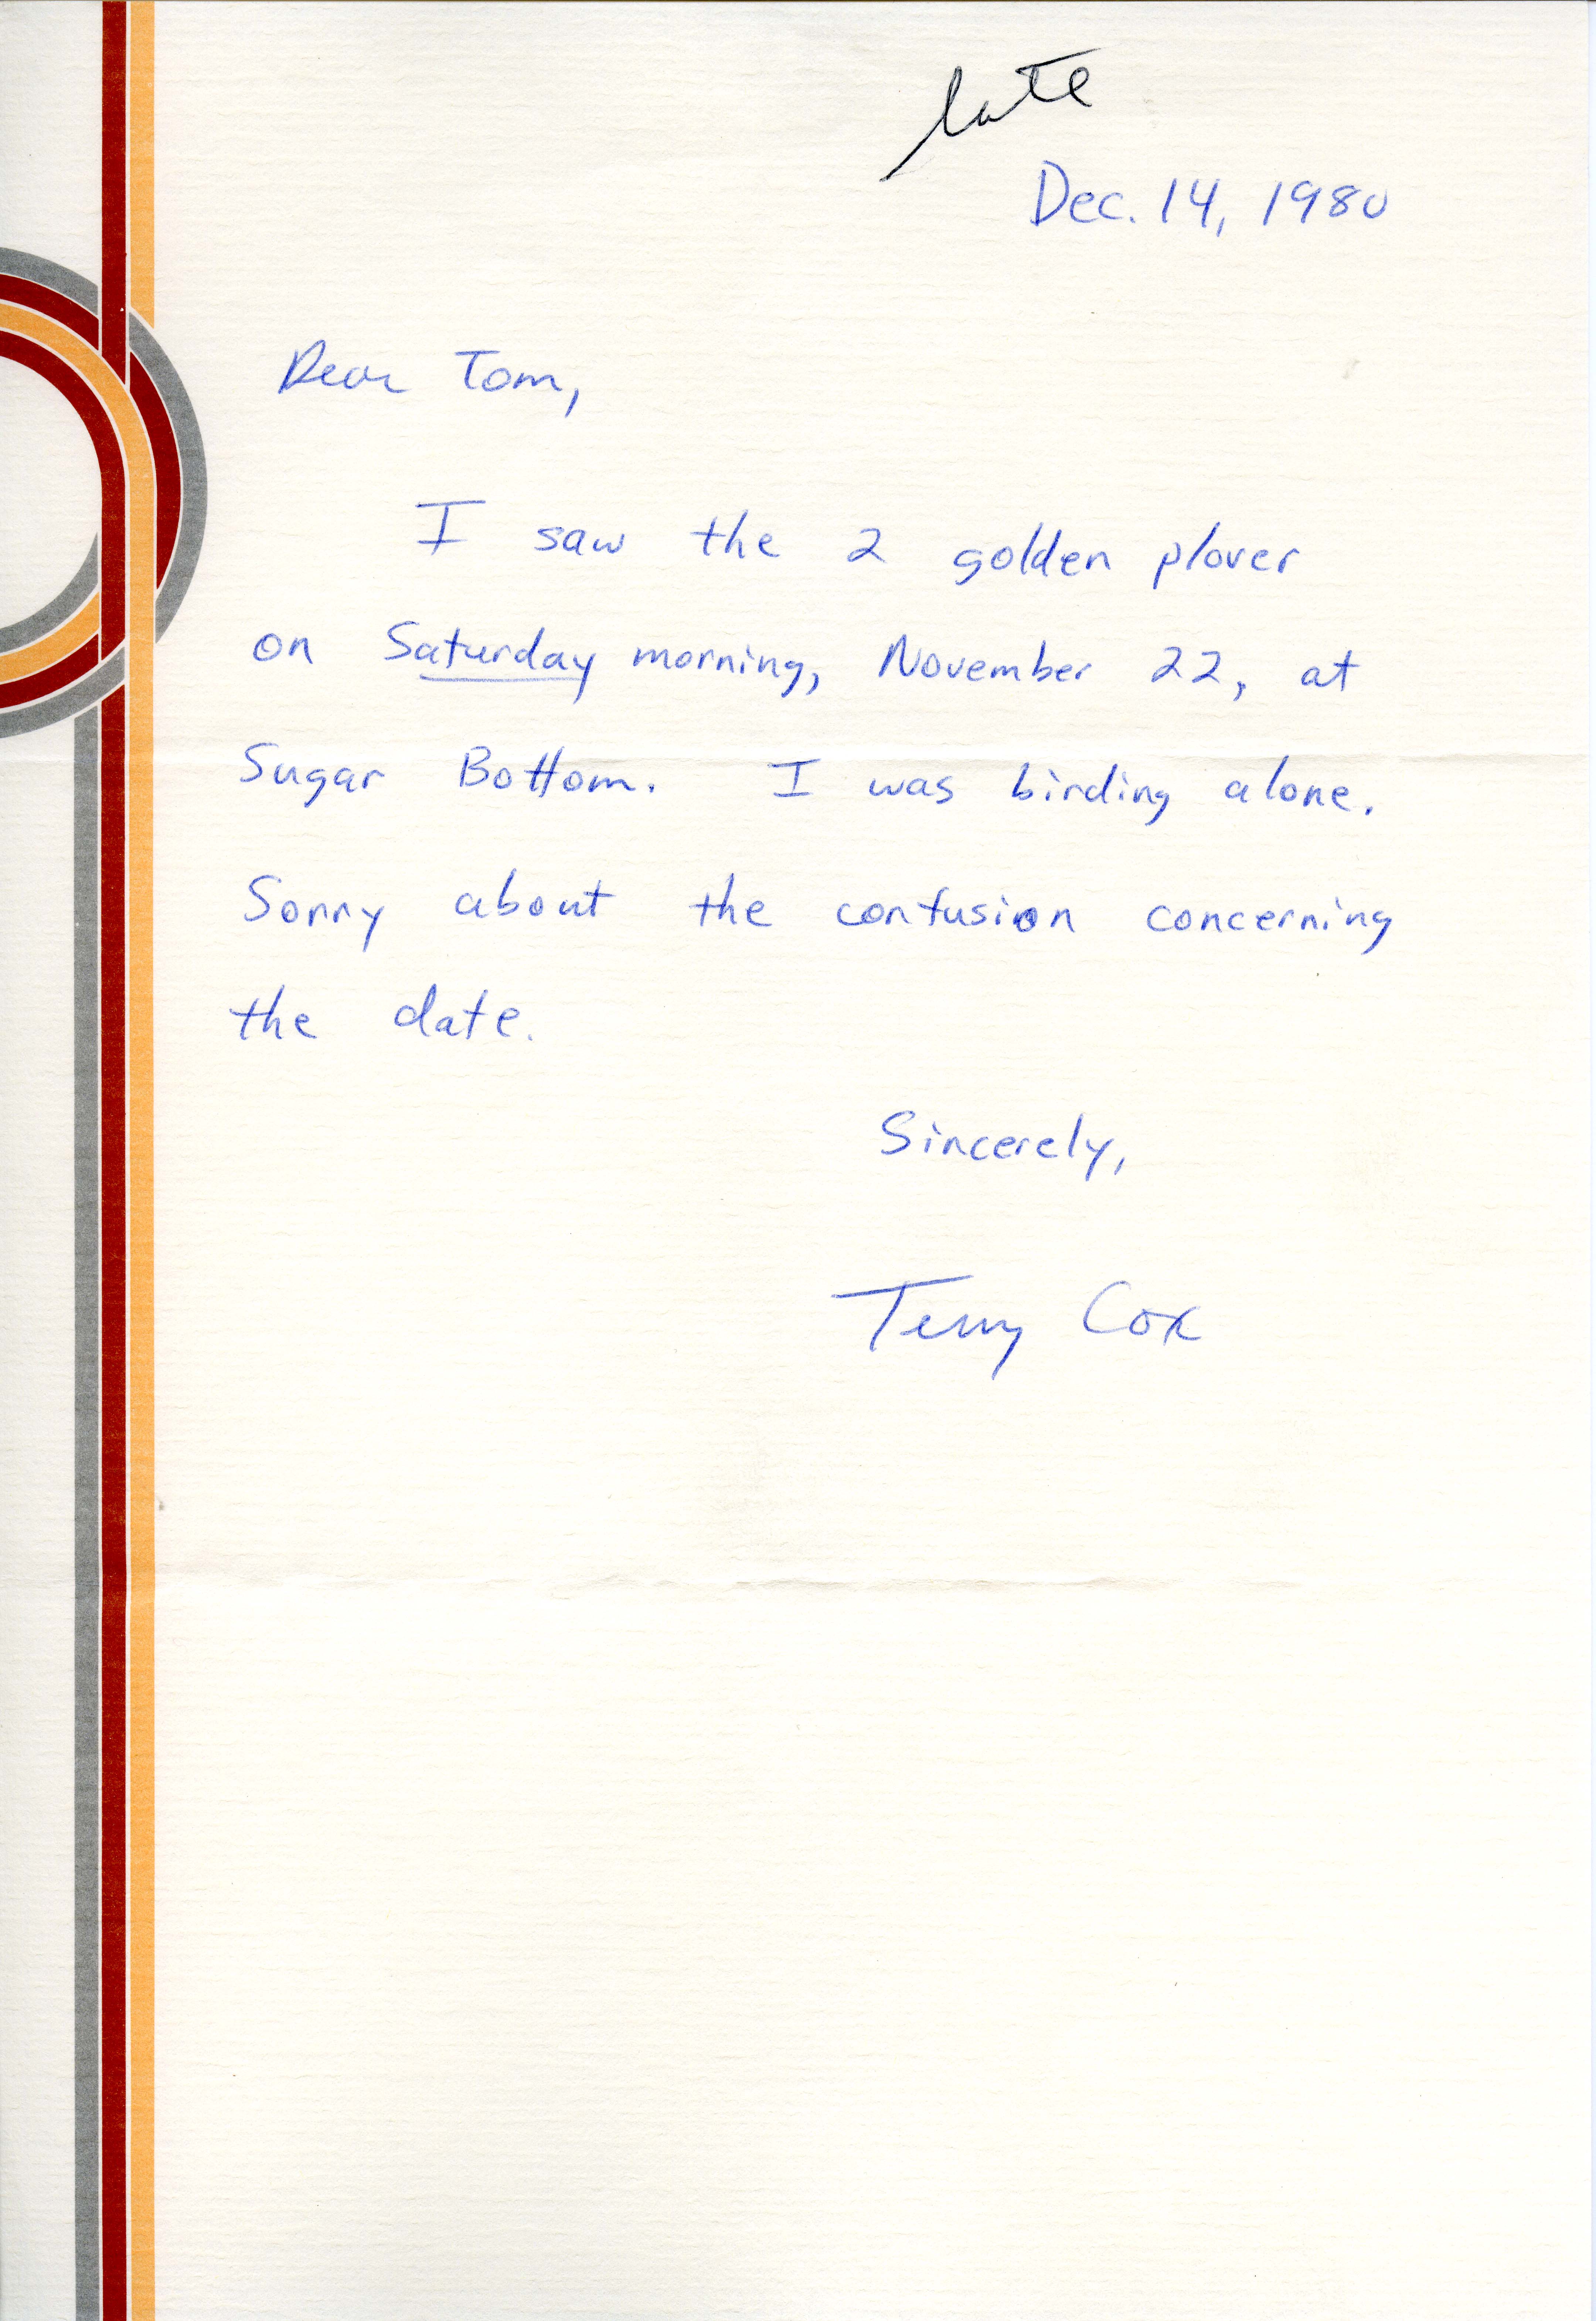 Terry Cox letter to Thomas Kent regarding Golden Plover sighting, December 14, 1980